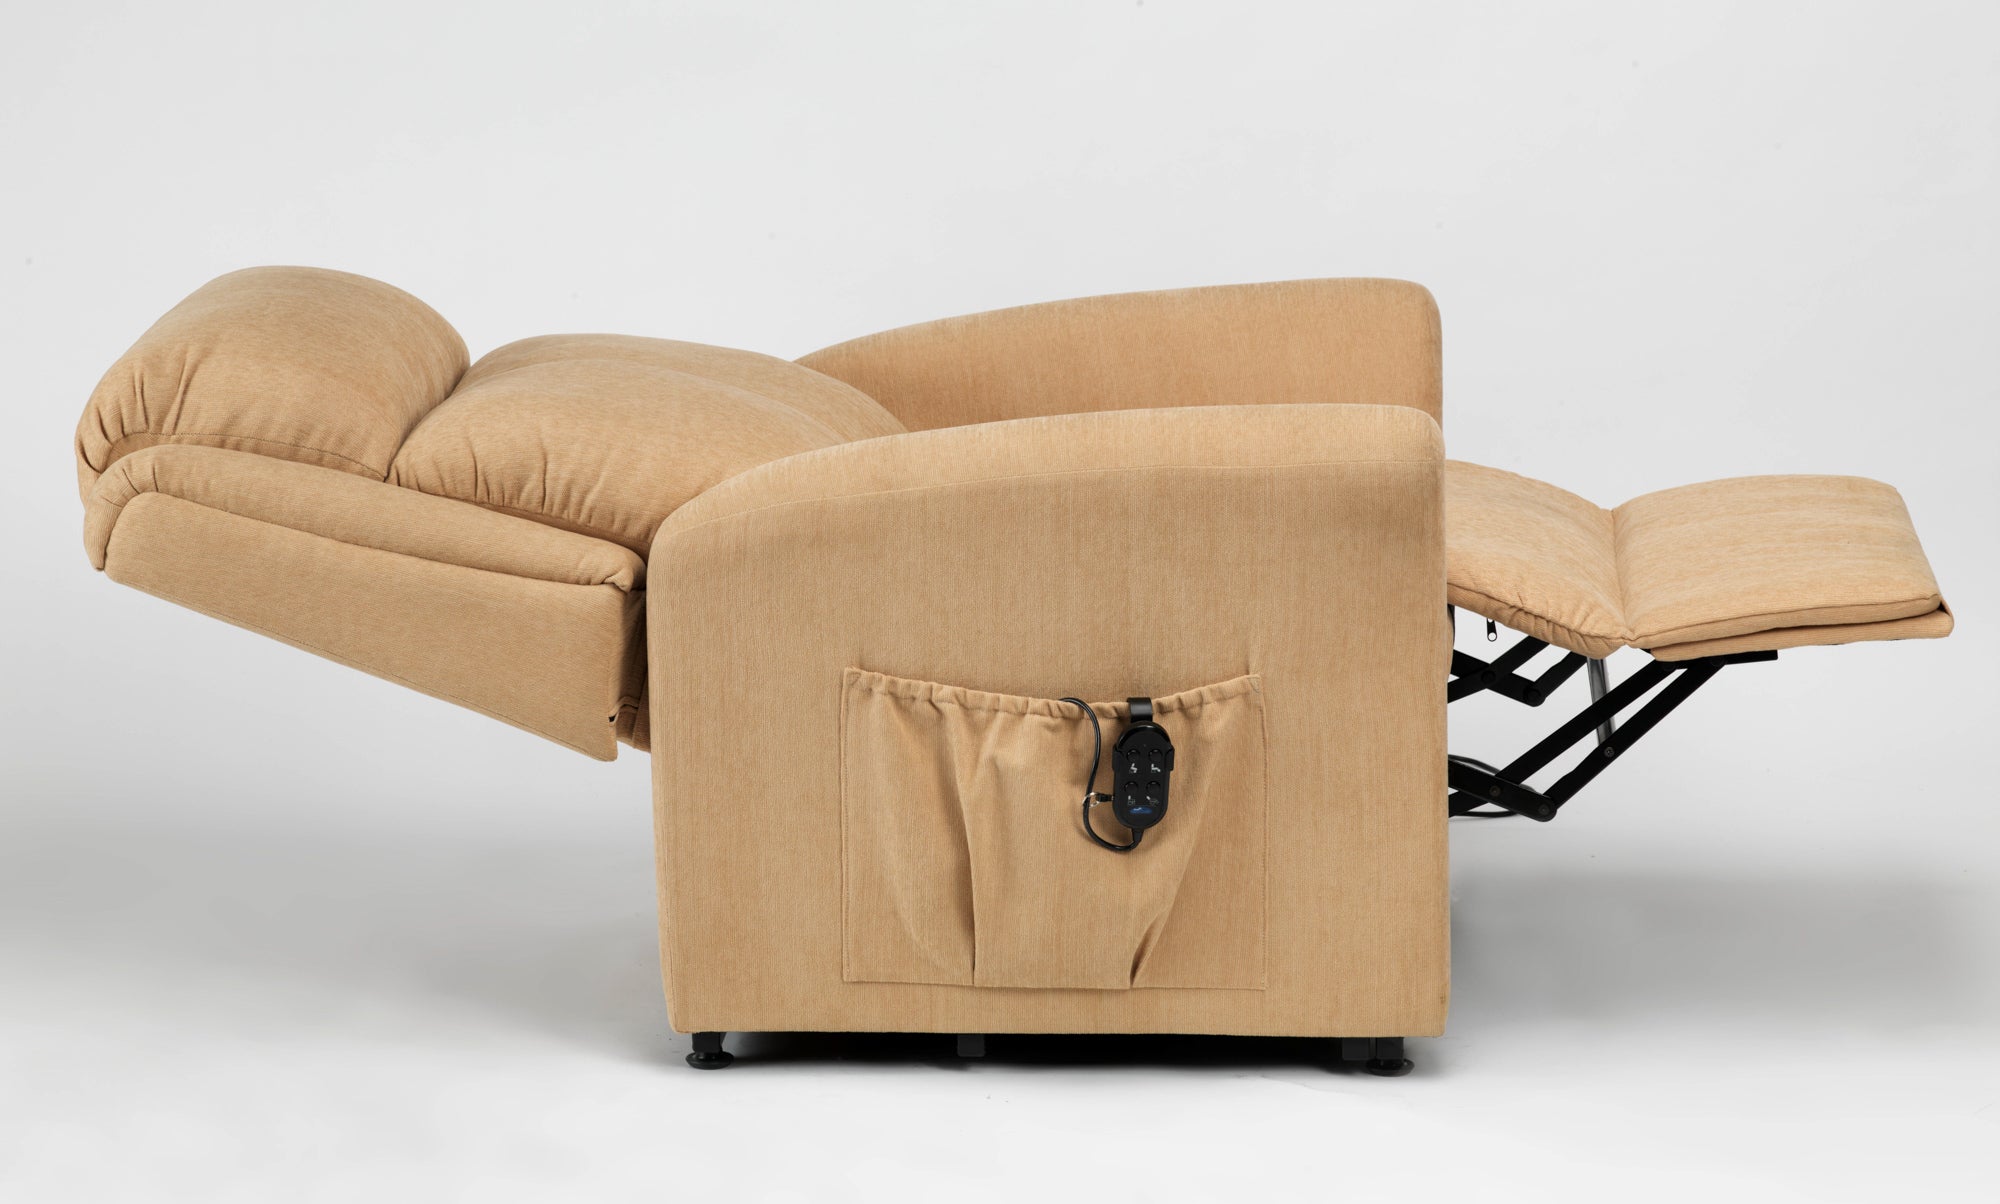 Memphis Riser Recliner - Ultimate Comfort & Style